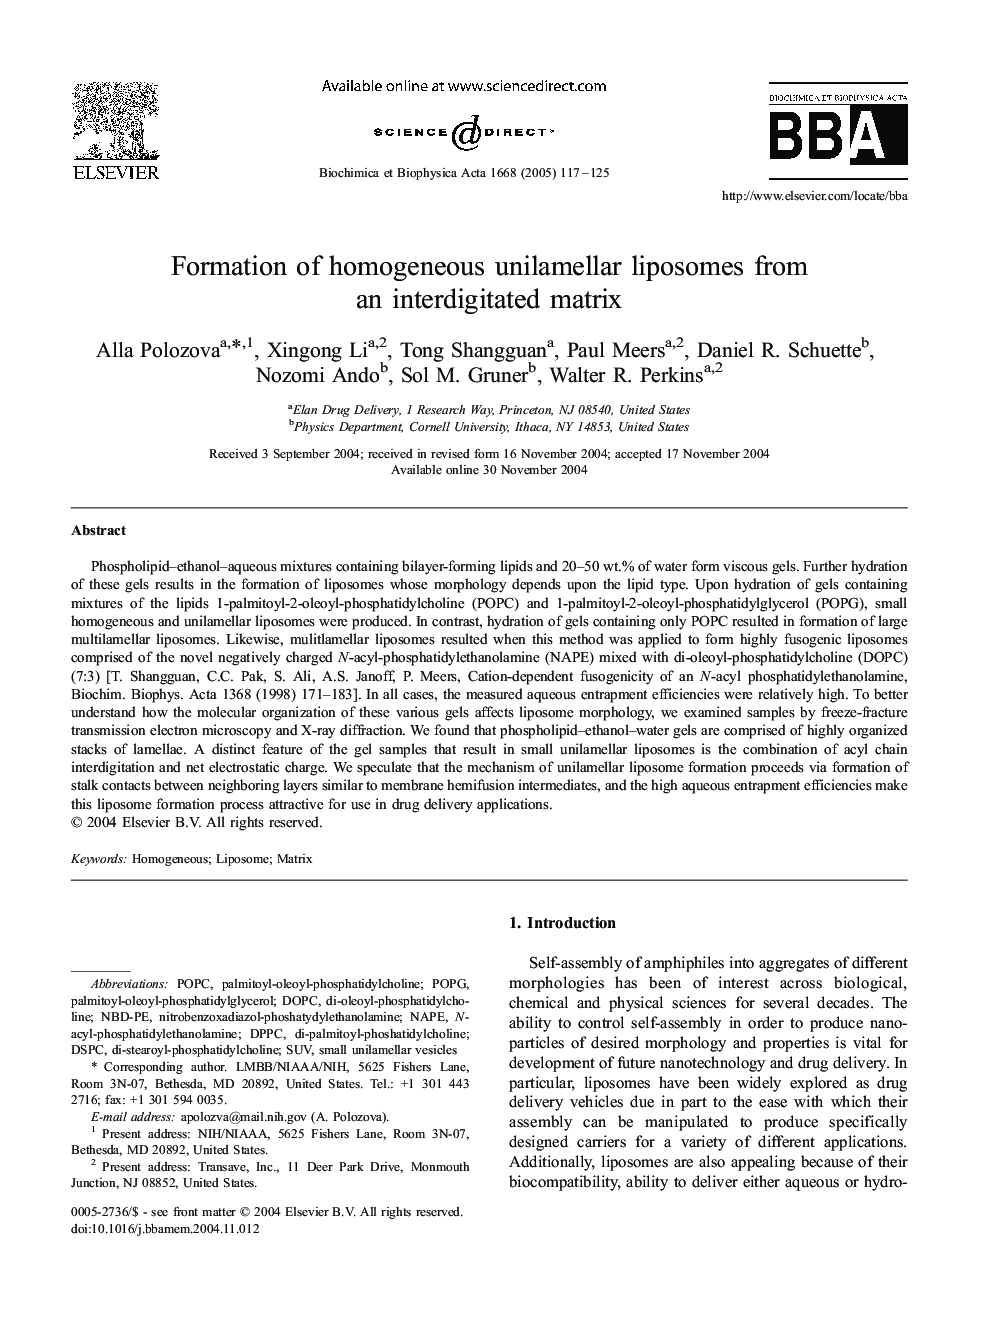 Formation of homogeneous unilamellar liposomes from an interdigitated matrix